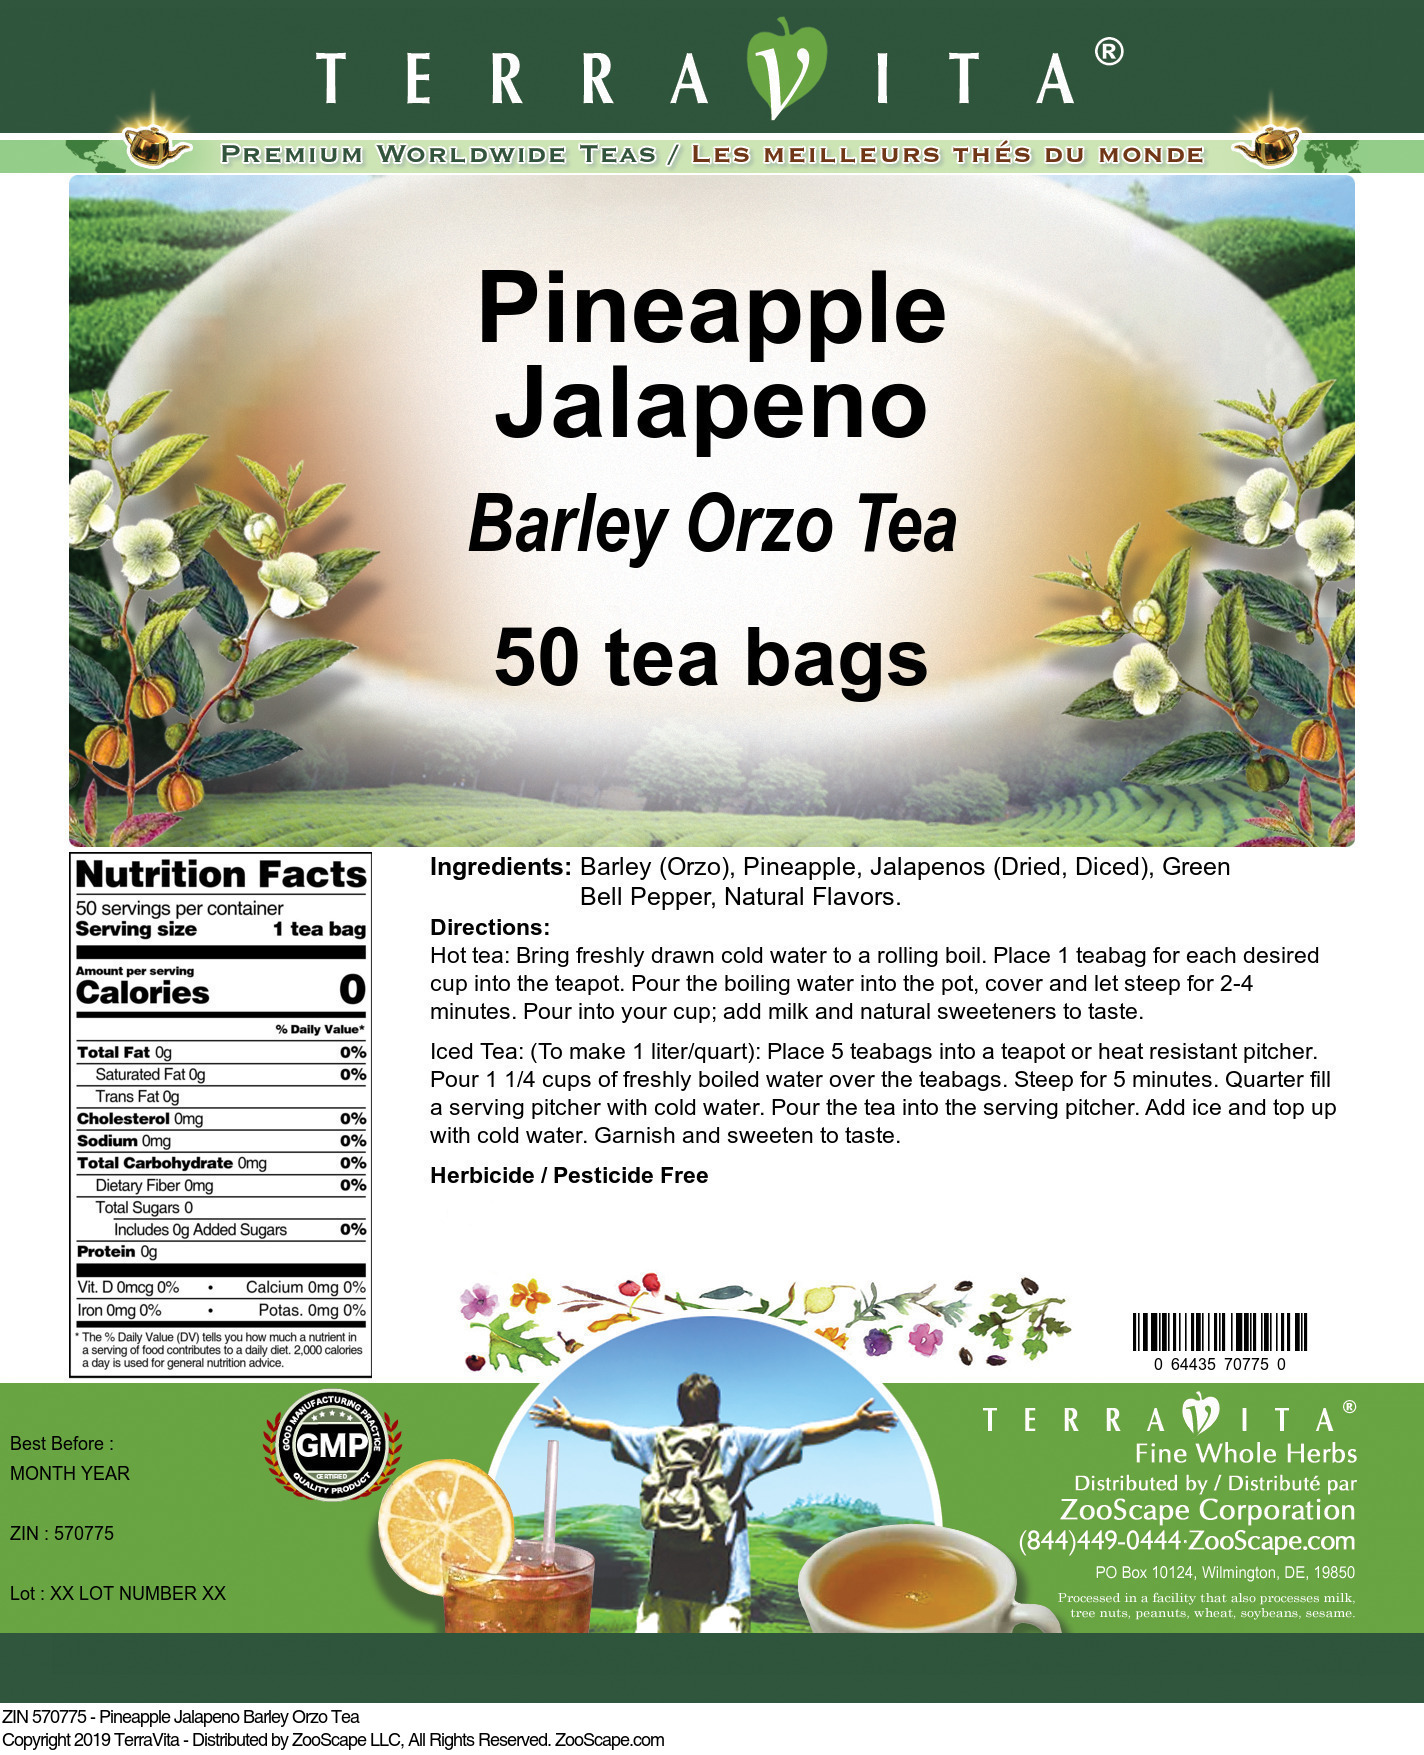 Pineapple Jalapeno Barley Orzo Tea - Label